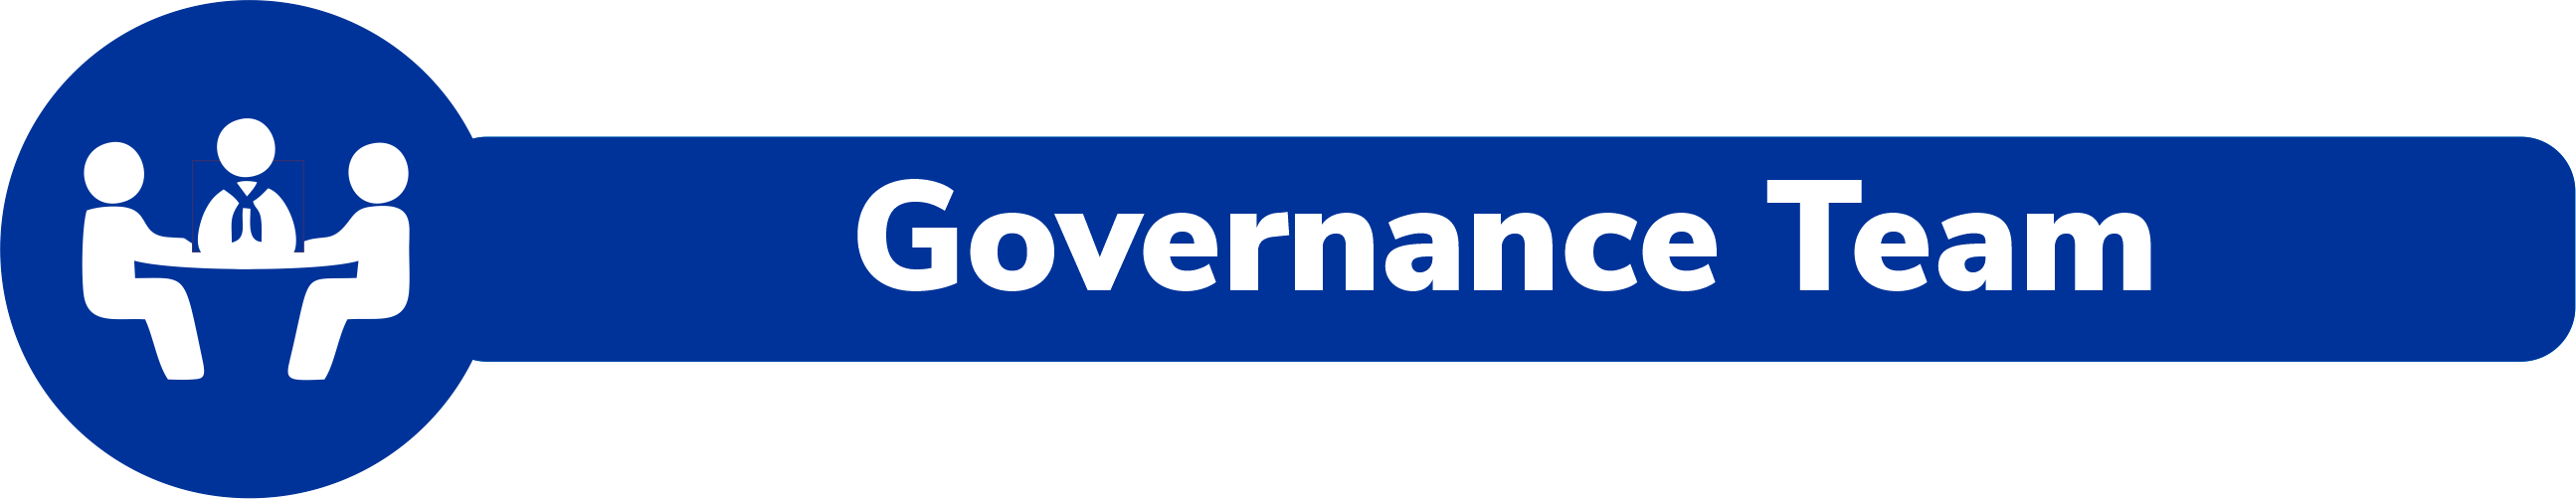 Governance Team 